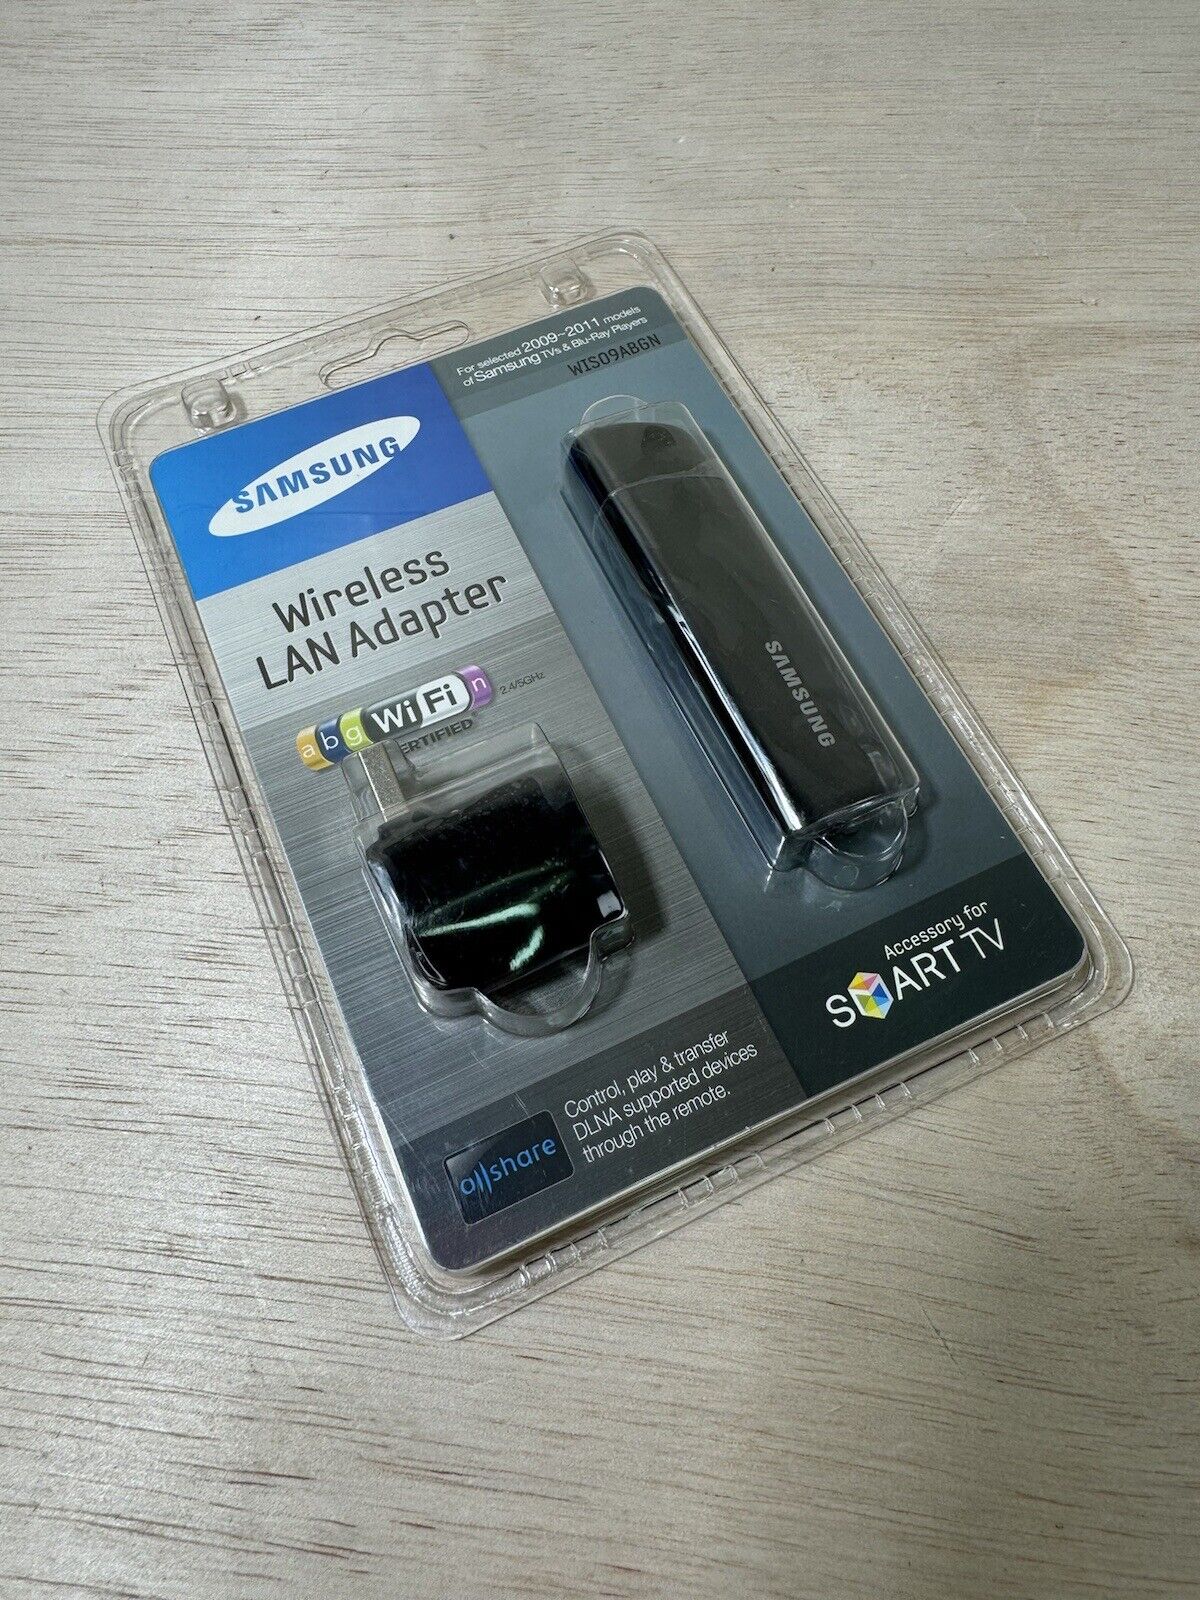 Samsung WIS09ABGN LinkStick Wireless LAN Adapter Brand New Sealed OEM Original